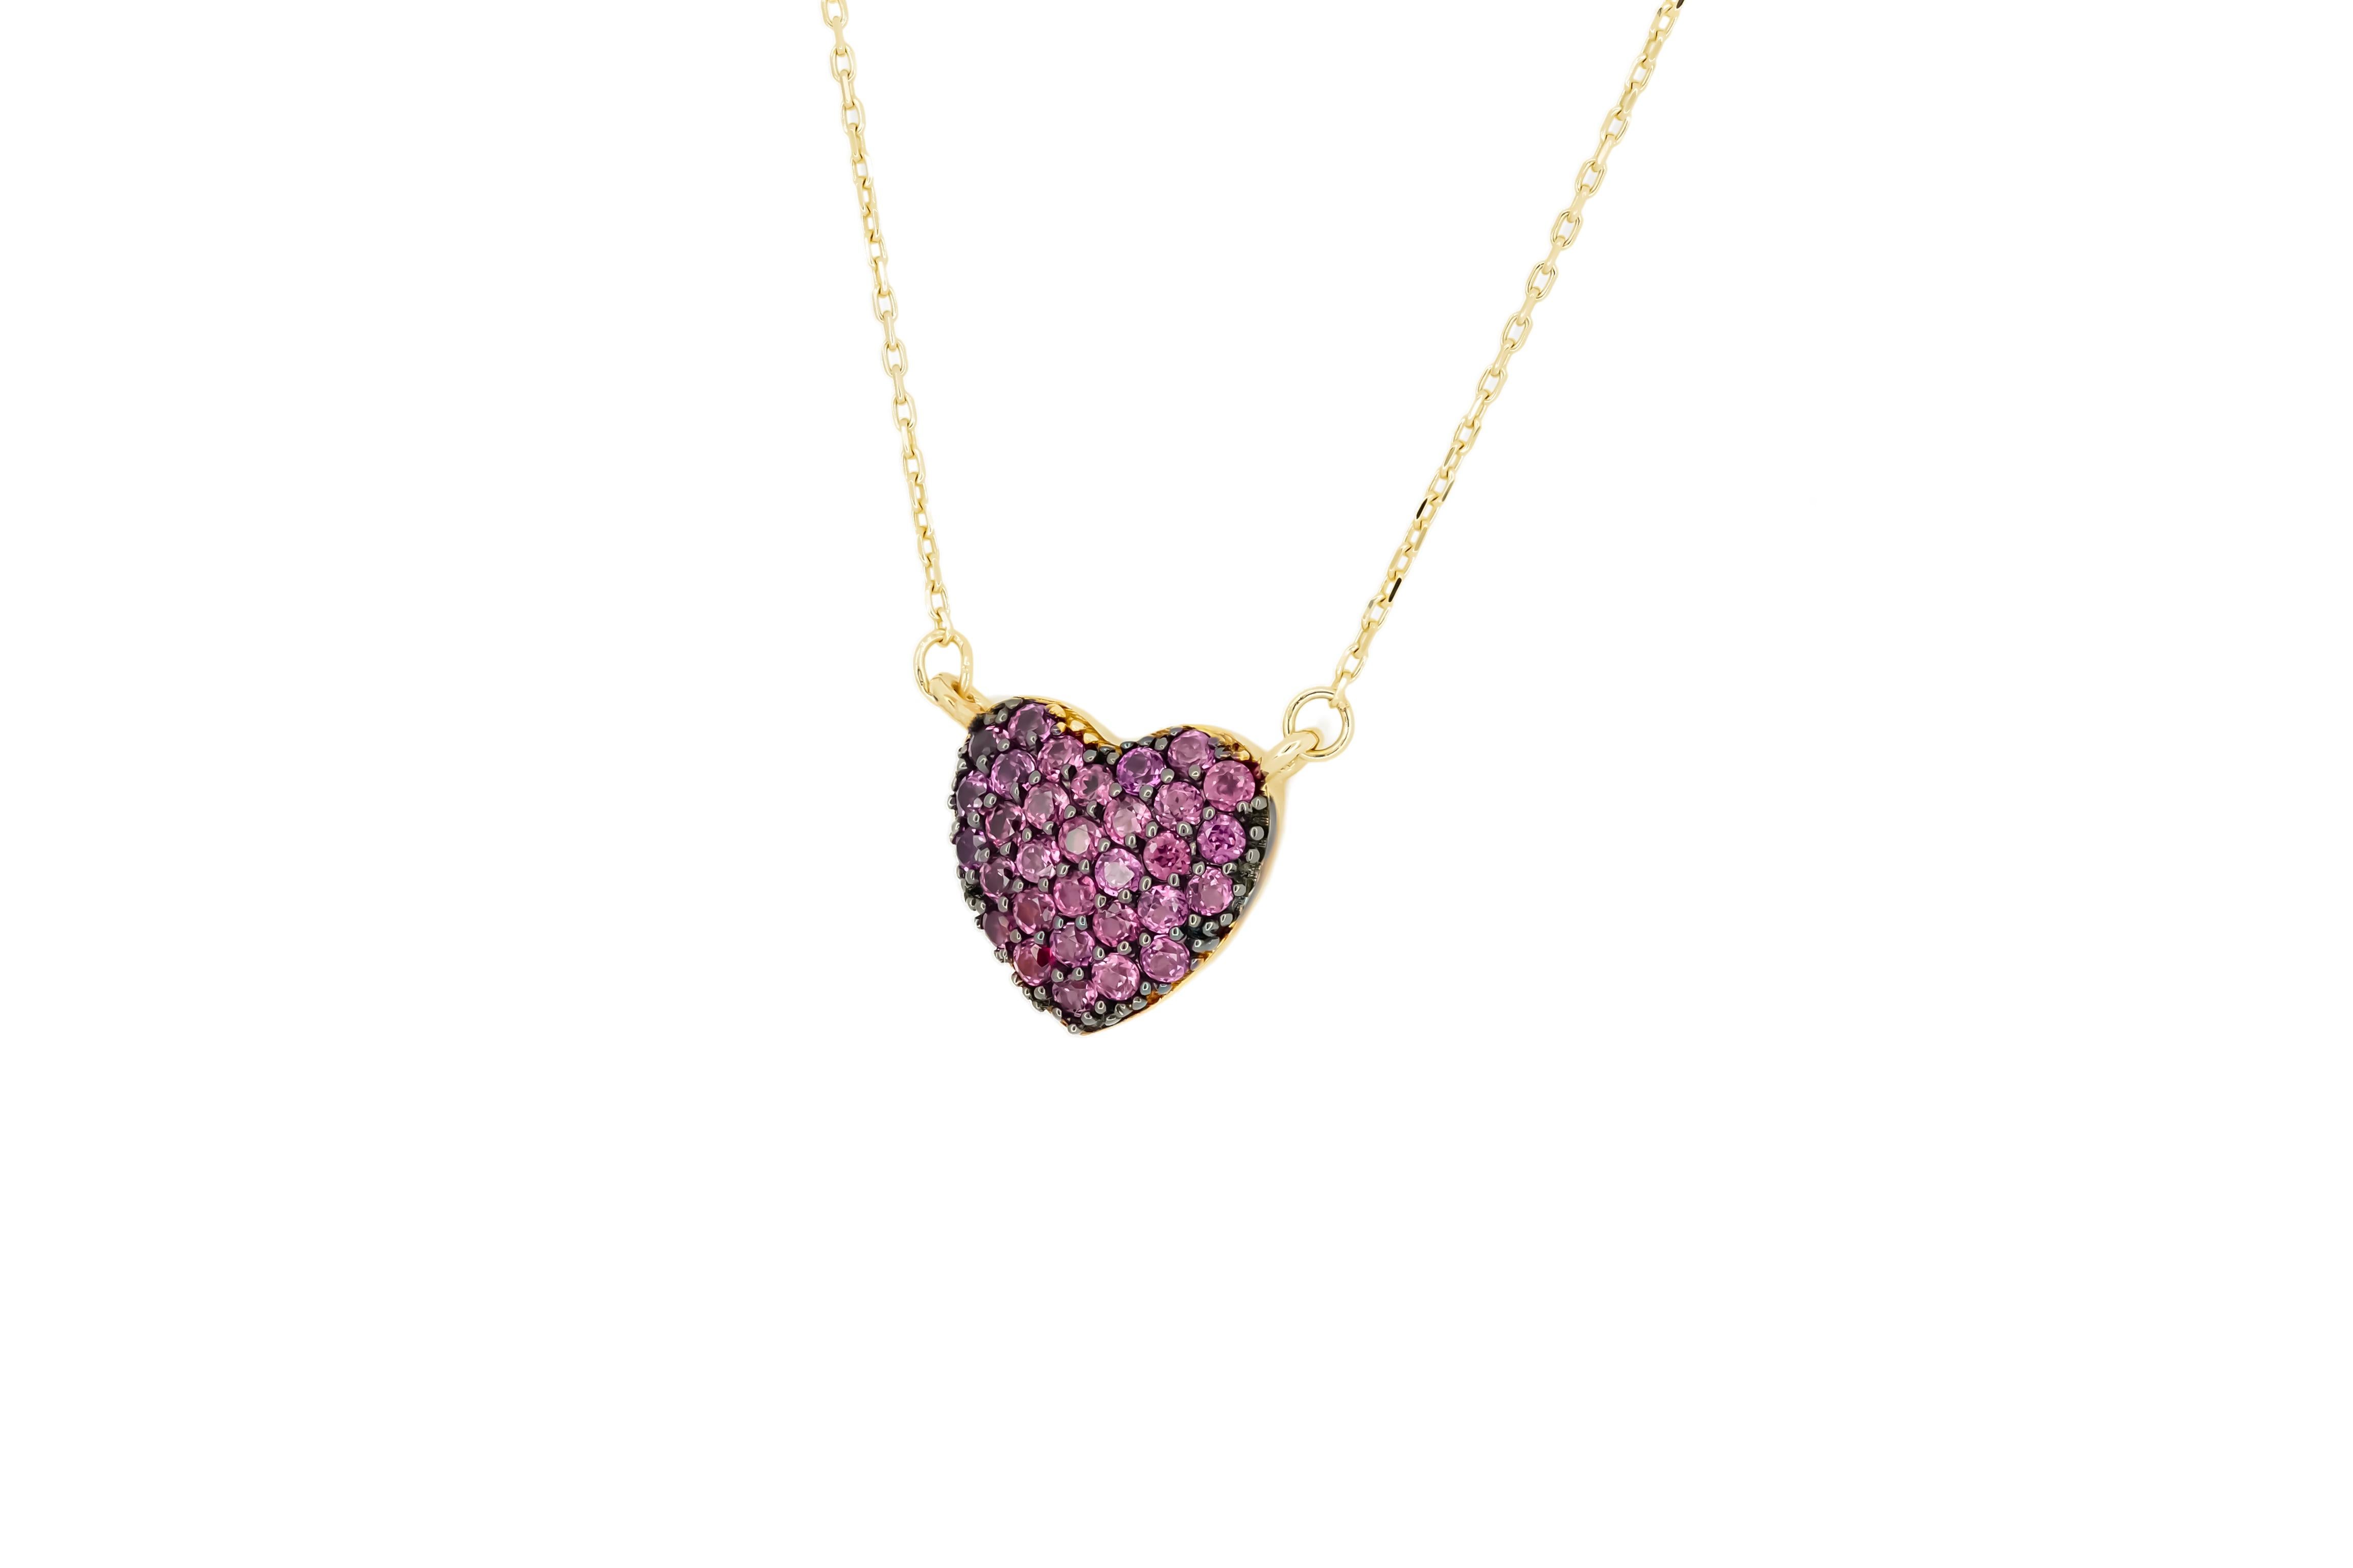 Modern Heart shaped 14k gold pendant necklace. 